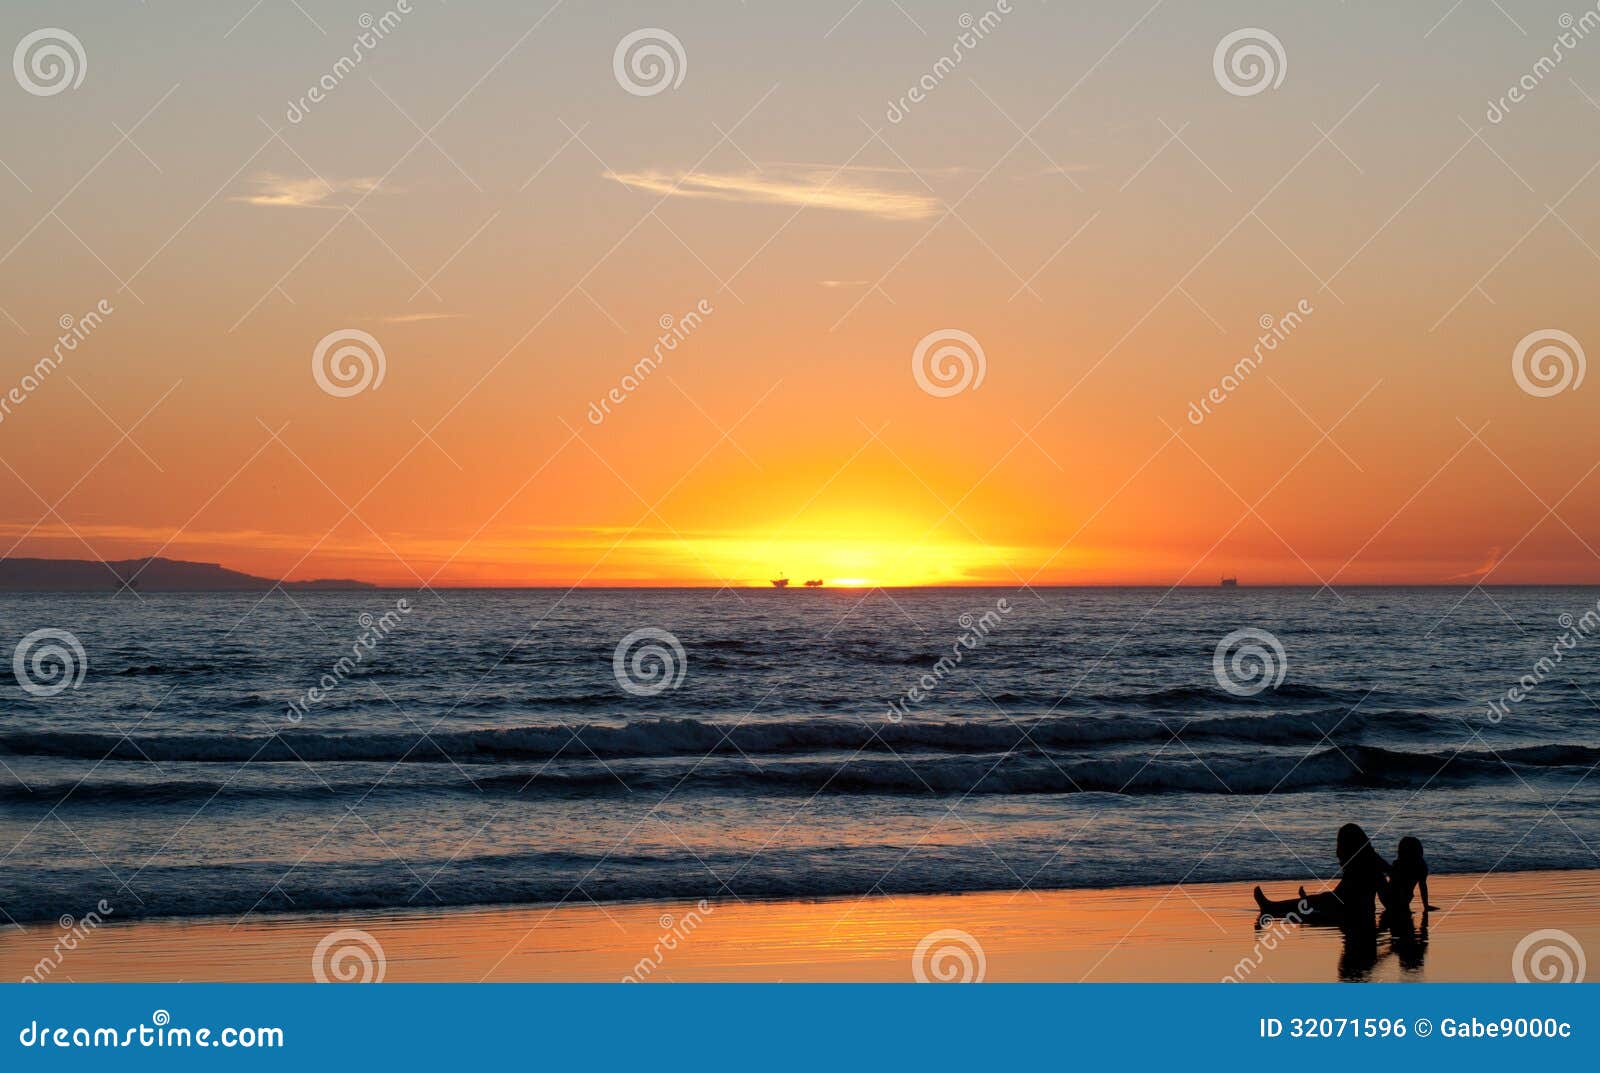 Golden beach sunset stock photo. Image of holidays, huntington - 32071596